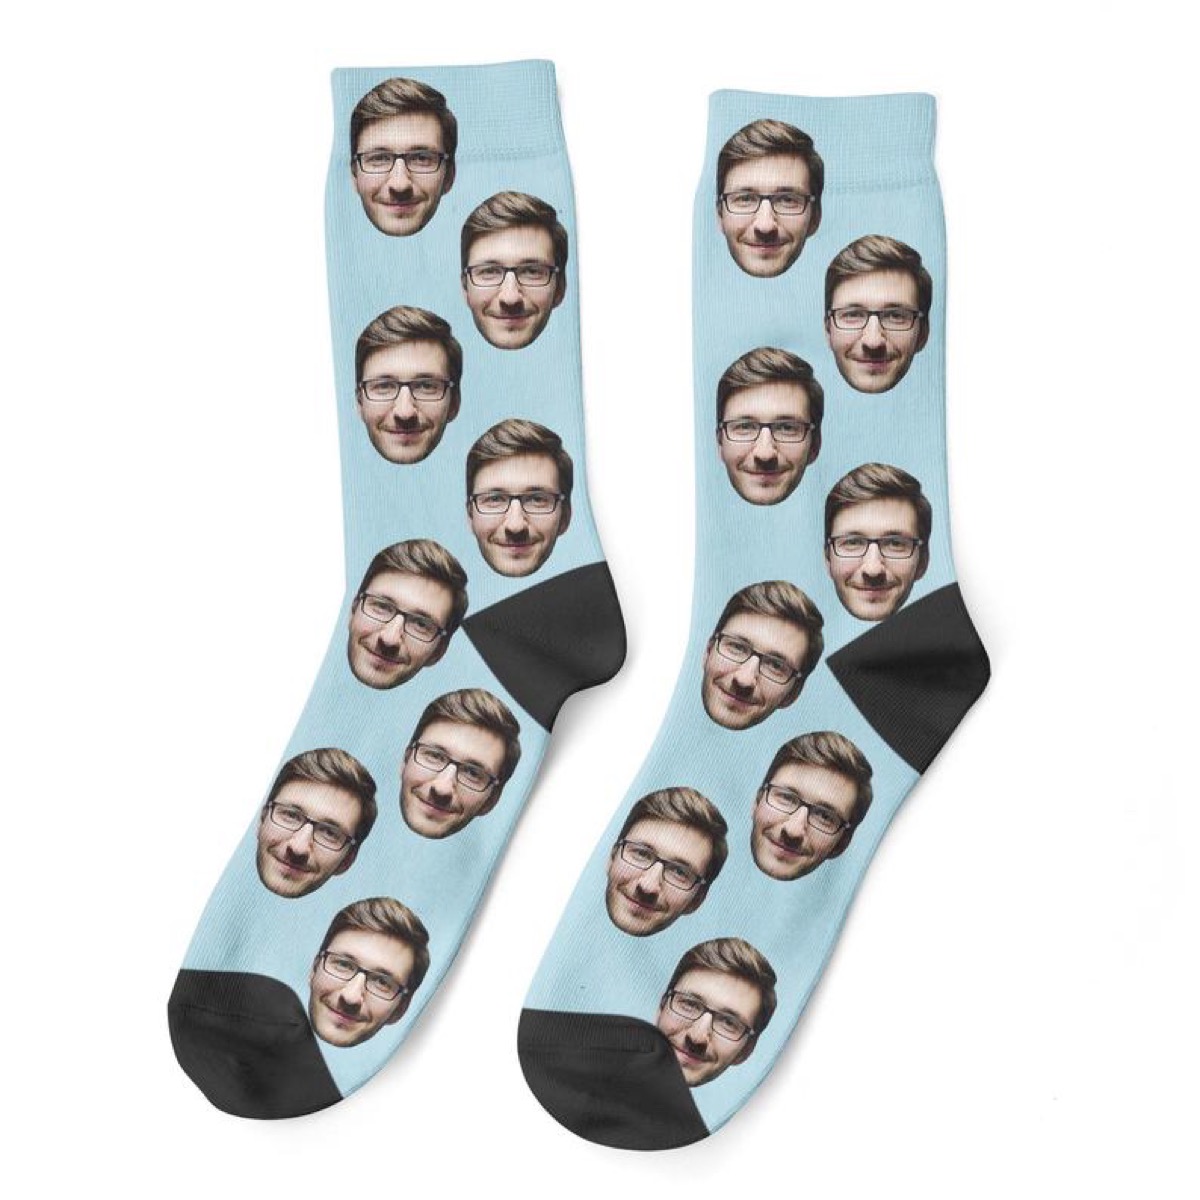 Man's face on custom pair of socks